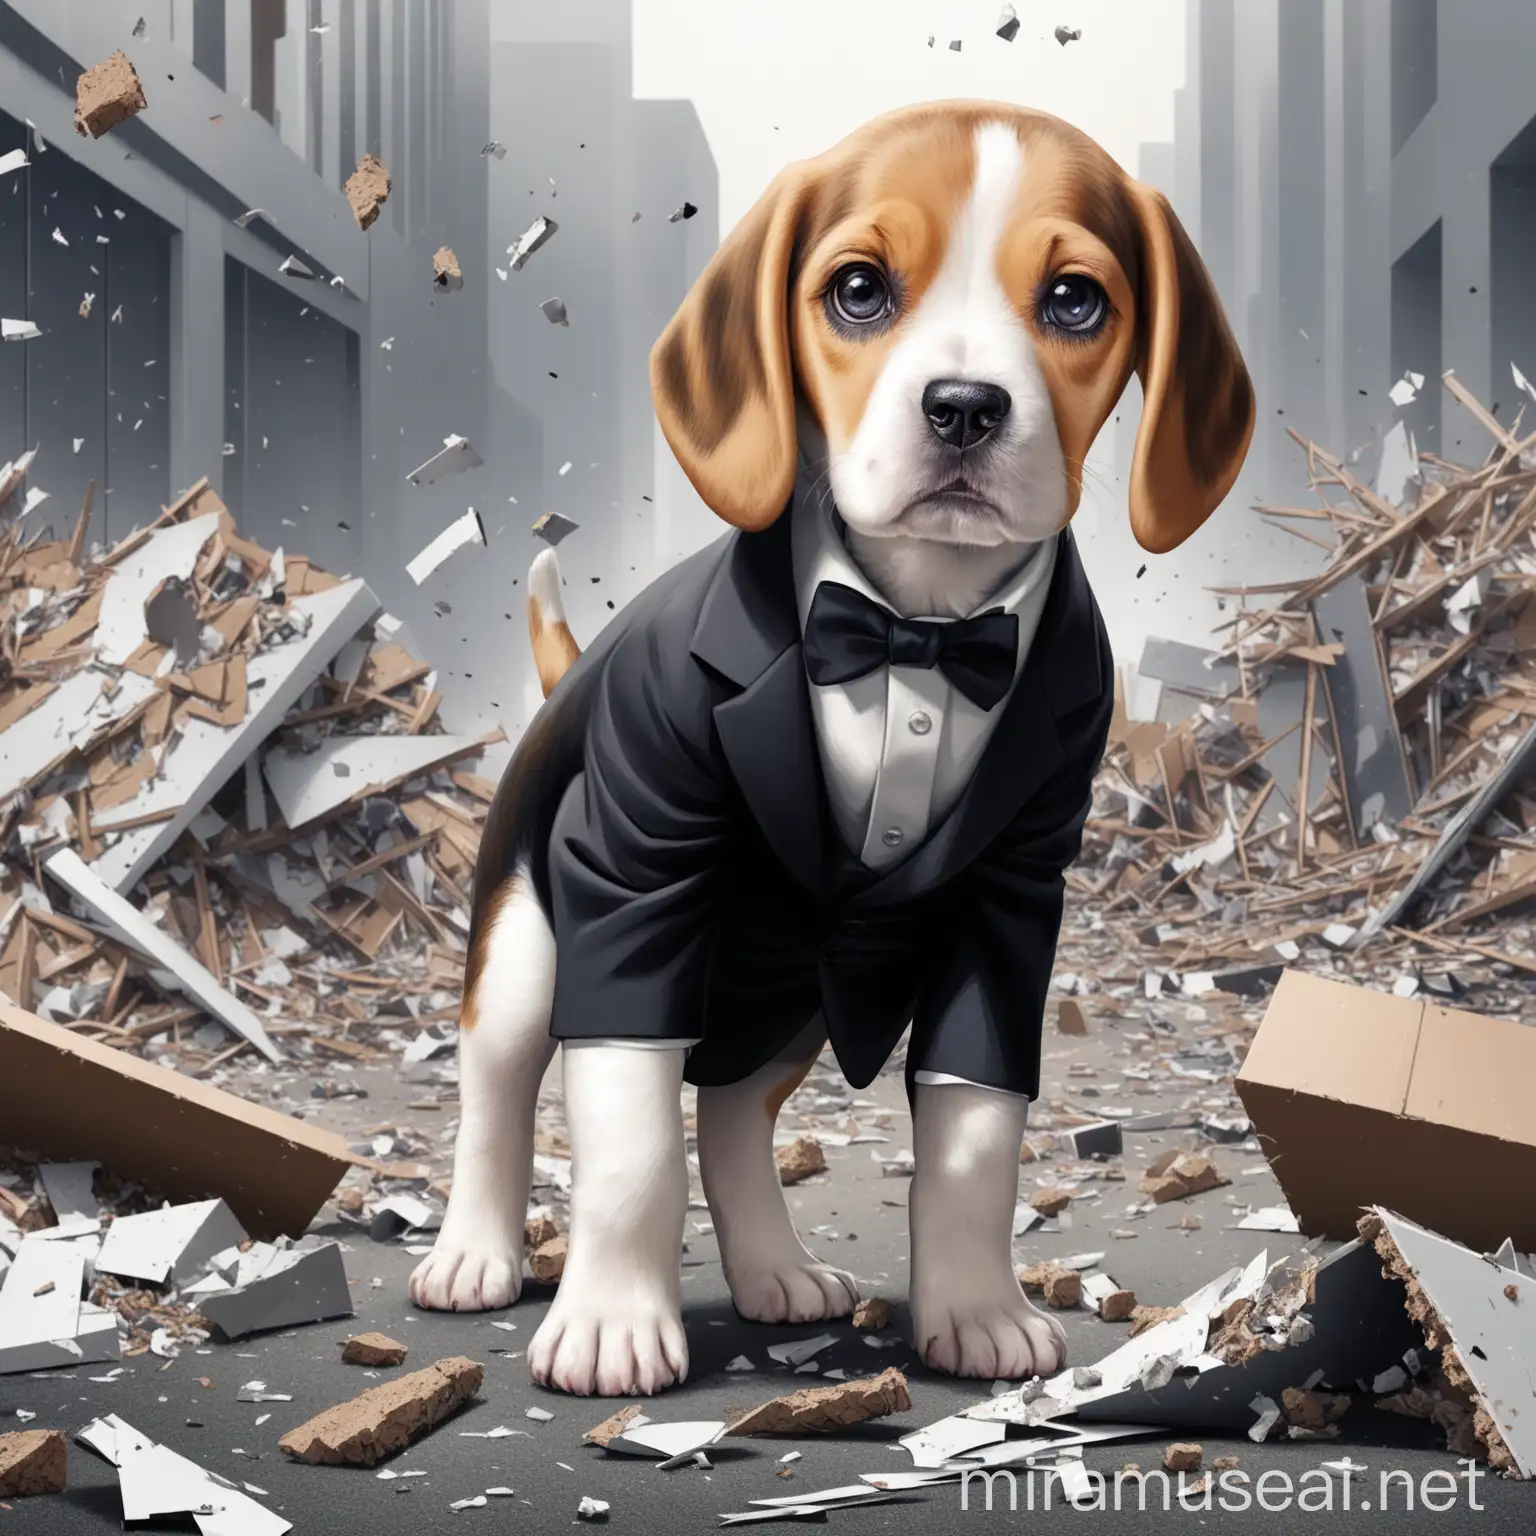 Adorable Beagle Puppy in Suit Amidst Hoarding Debris